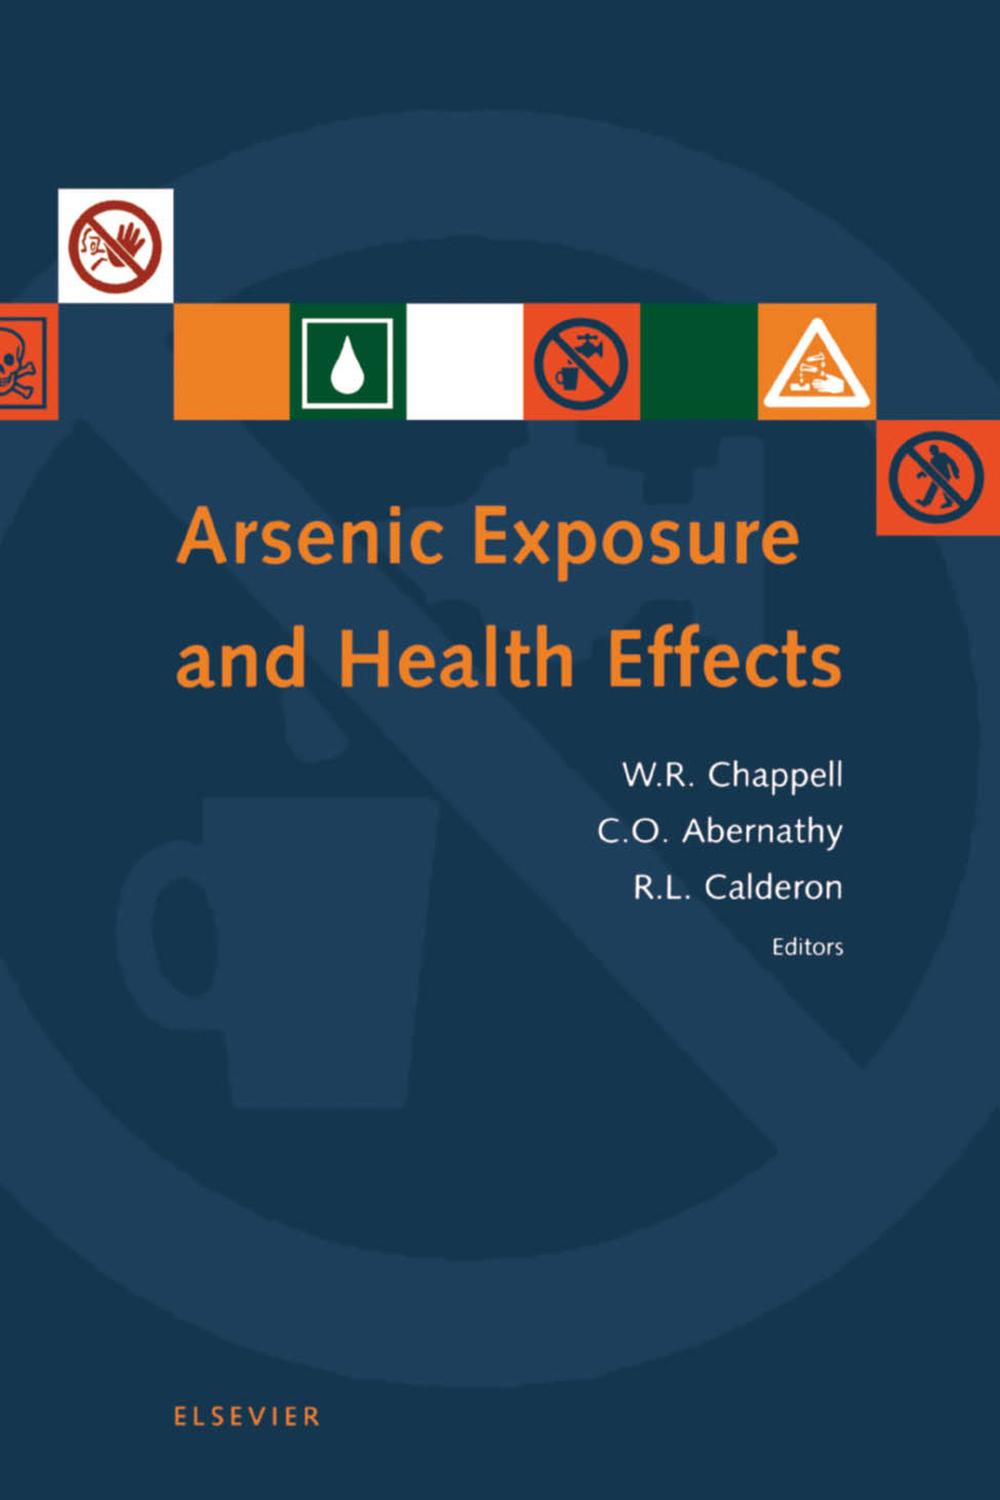 Arsenic Exposure and Health Effects III - W.R. Chappell, C.O. Abernathy, R.L. Calderon